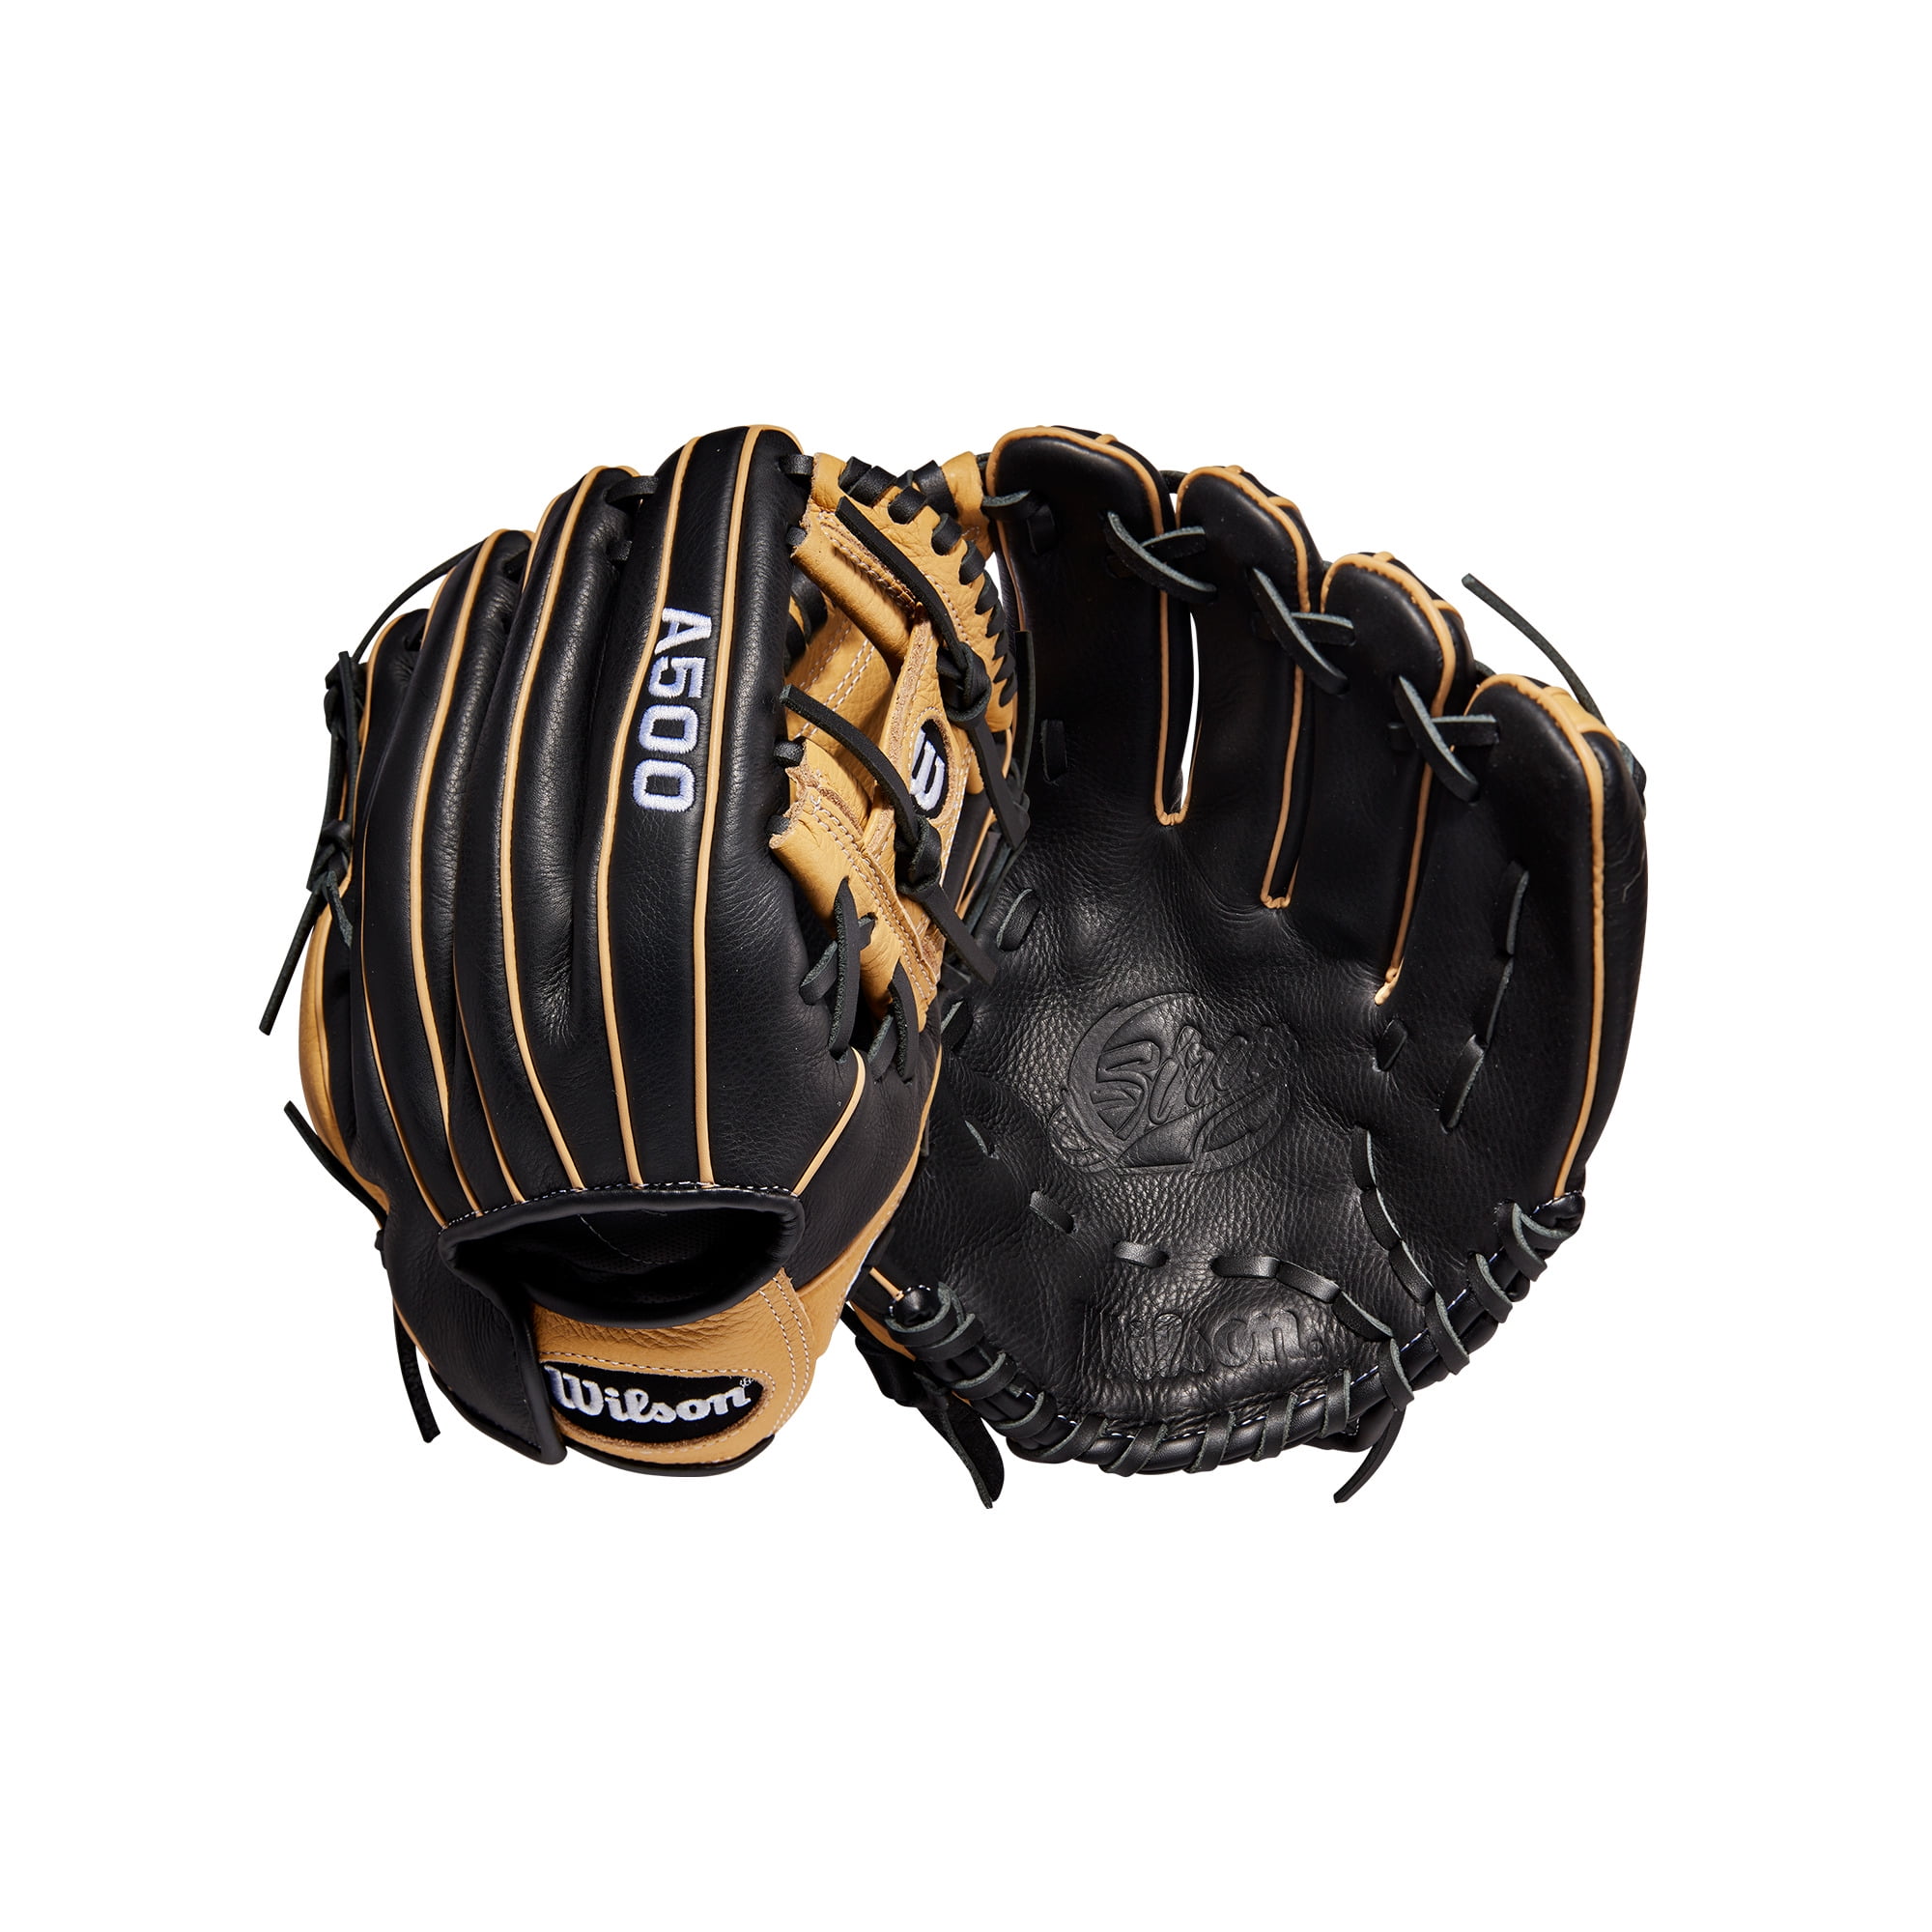 Wilson A500 12.5 Inch Travel Team Baseball Glove for sale online 